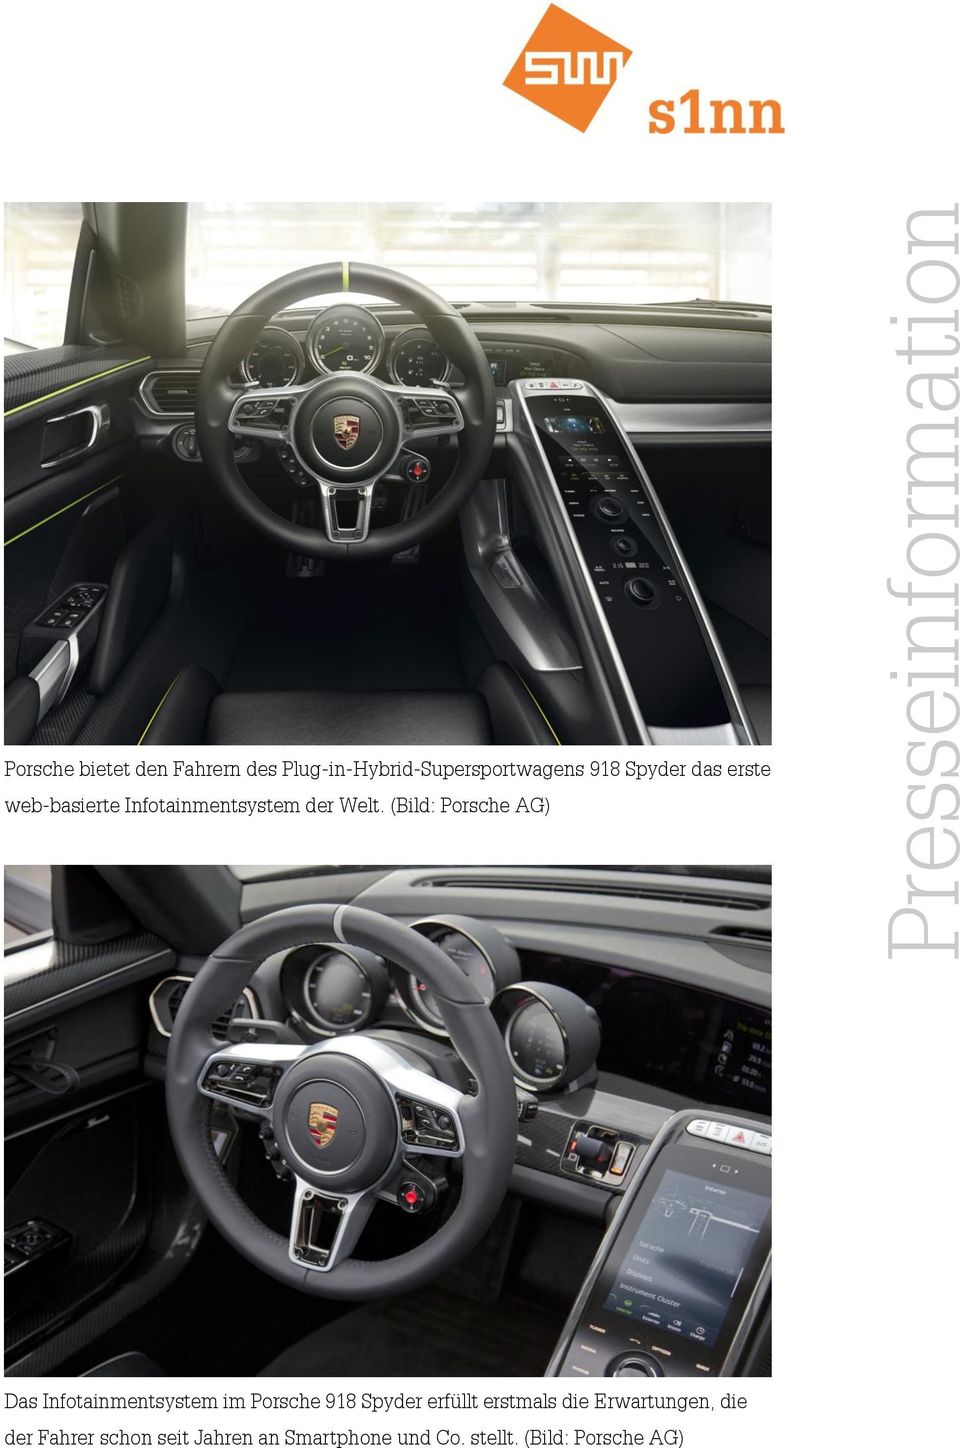 (Bild: Porsche AG) Das Infotainmentsystem im Porsche 918 Spyder erfüllt